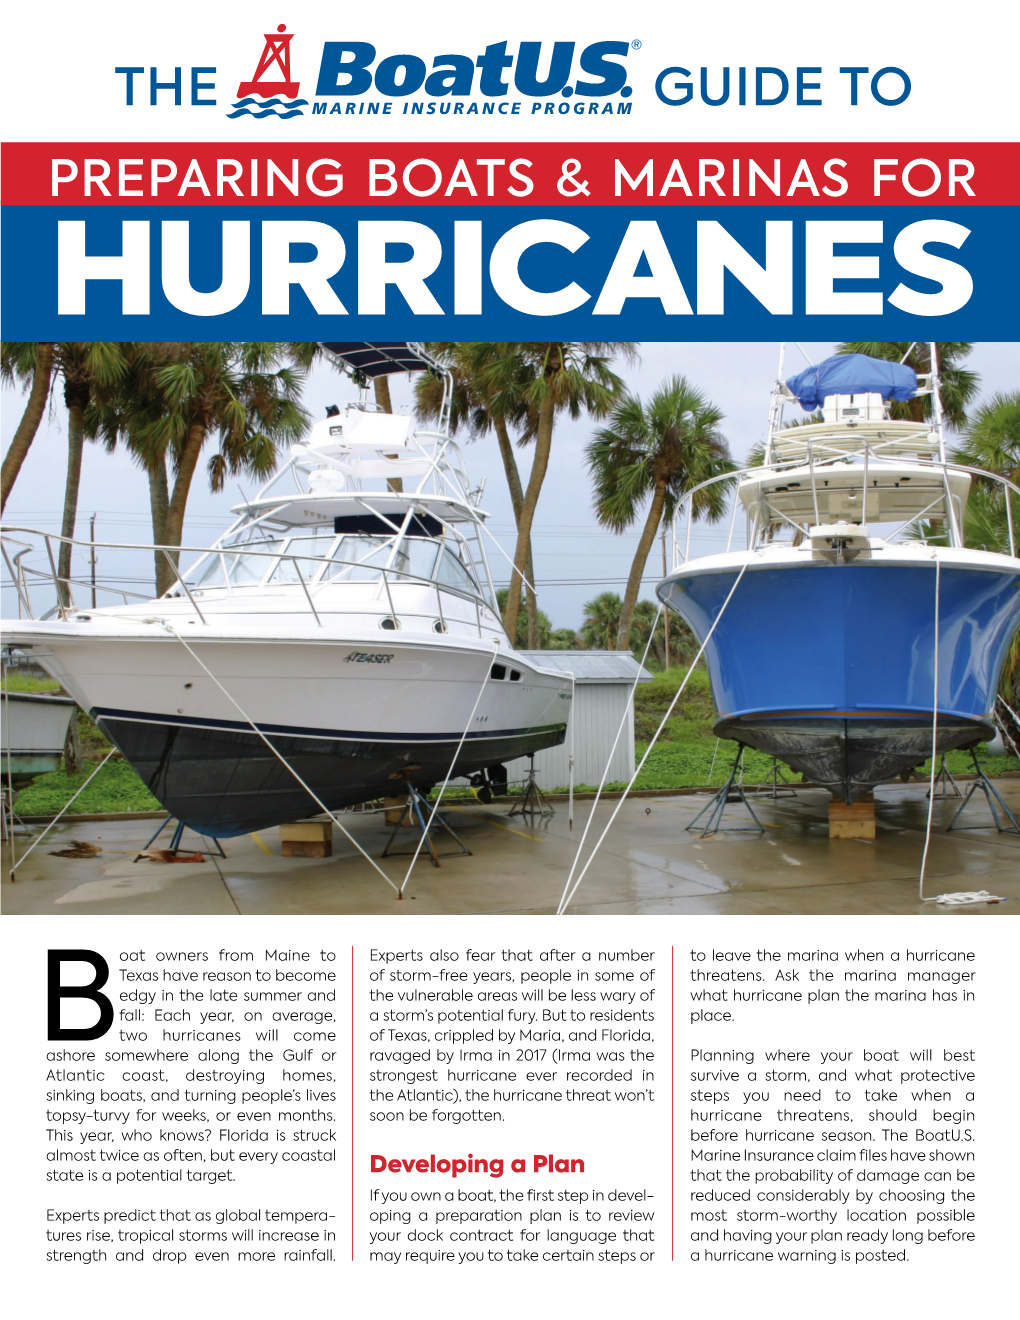 Preparing Boats & Marinas for Hurricanes